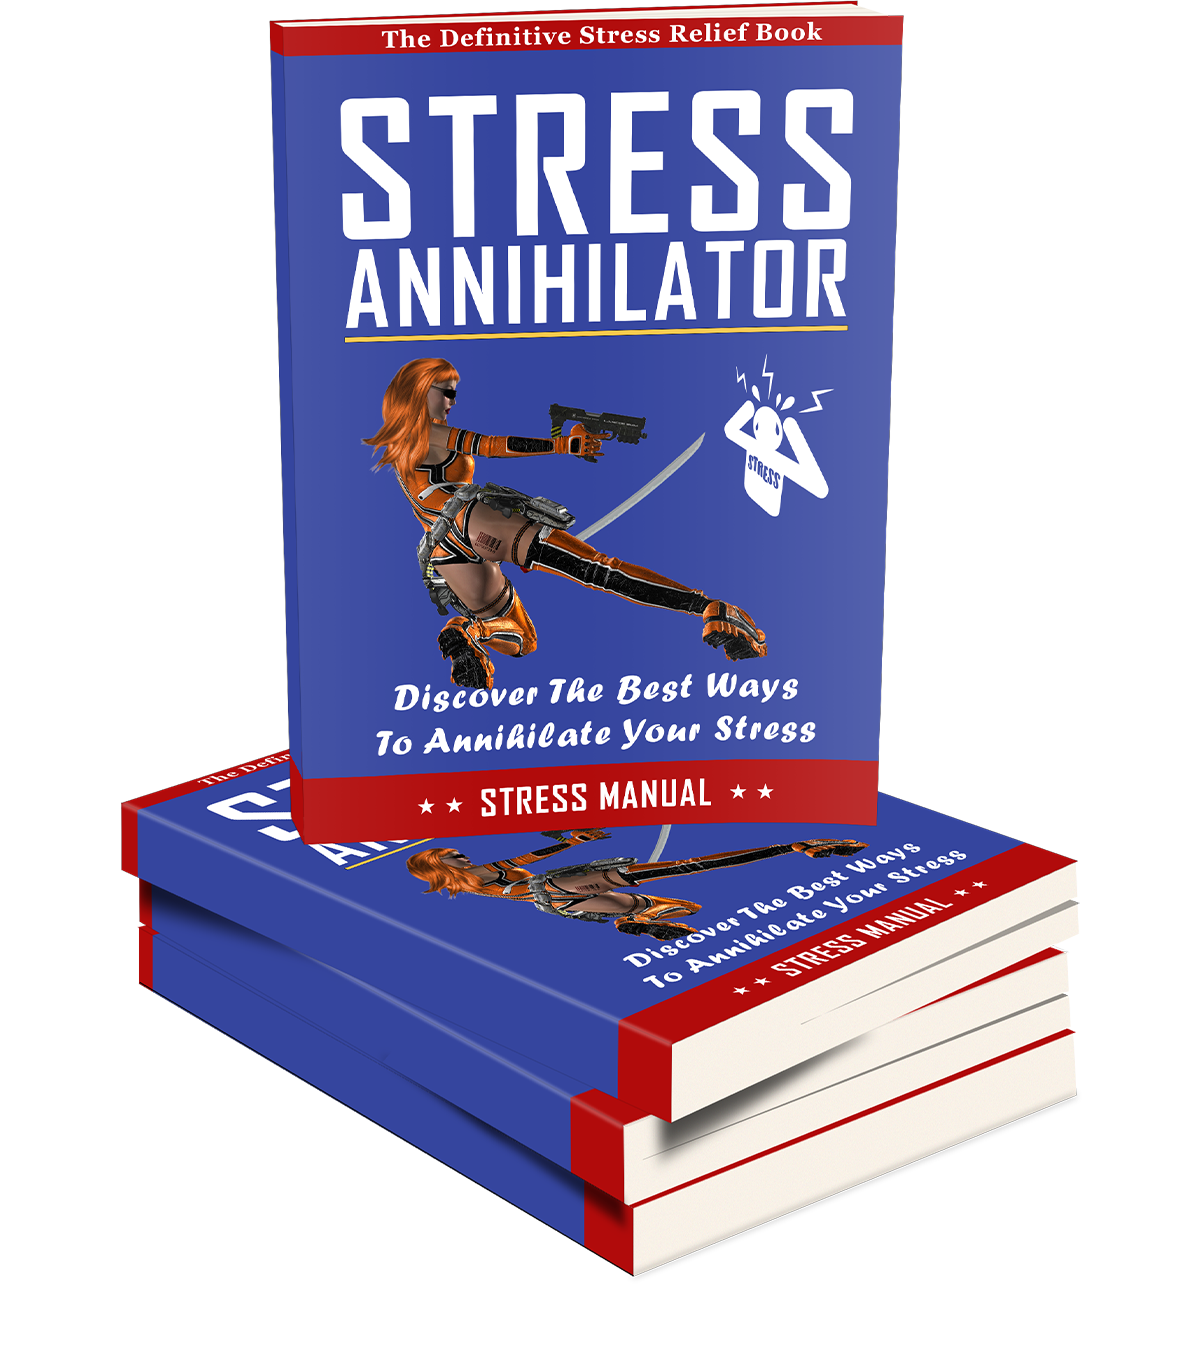 Stress Annihilator books